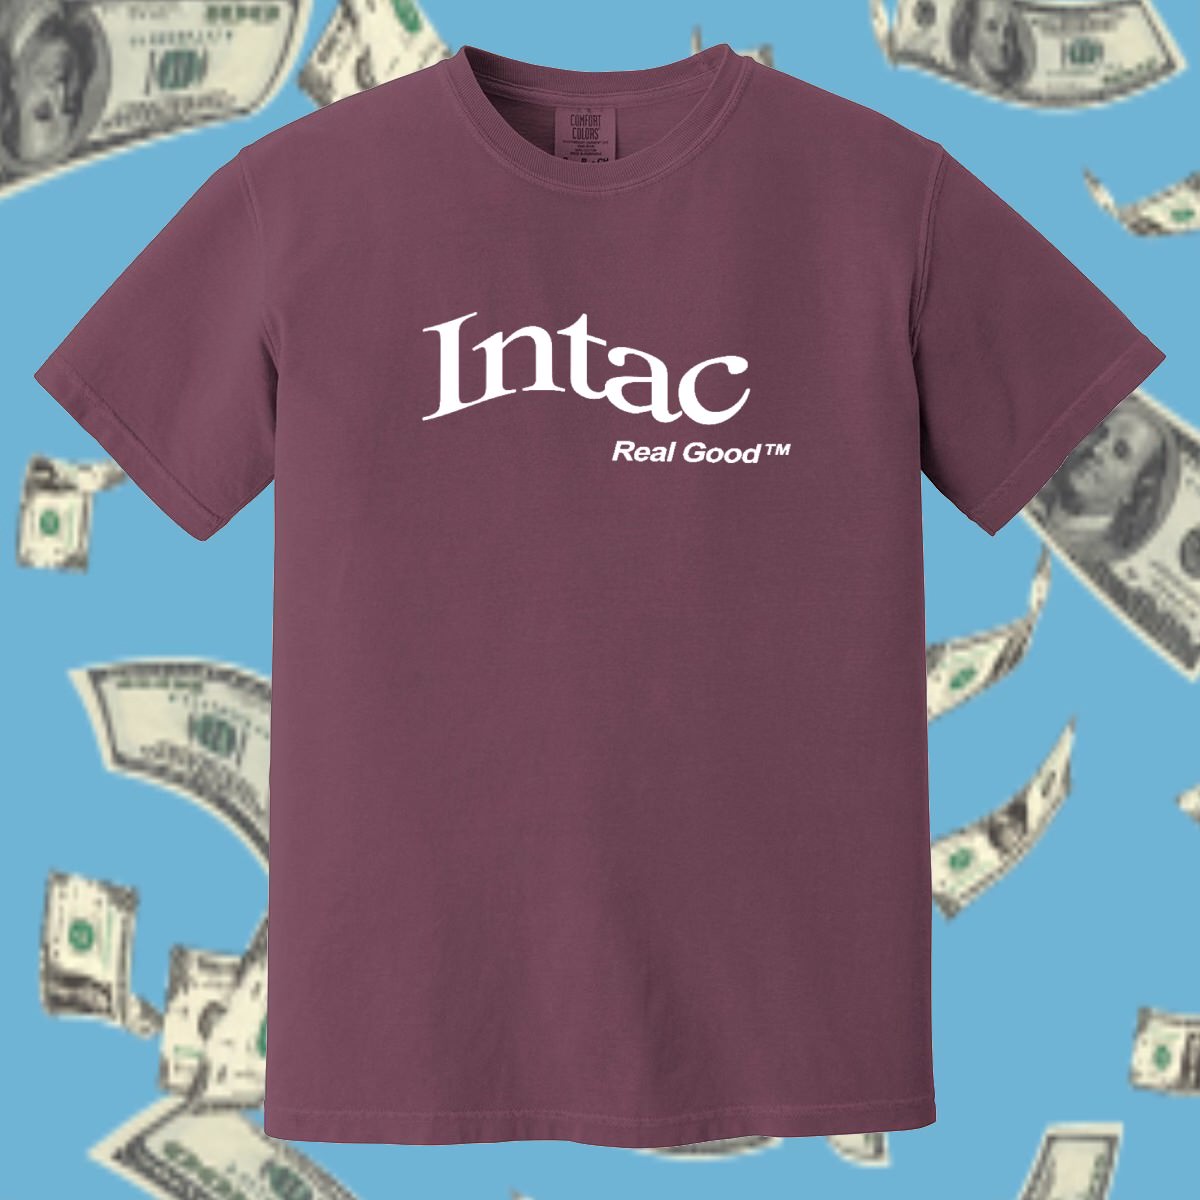 Intac "Real Good" & "Shareholder" Shirts